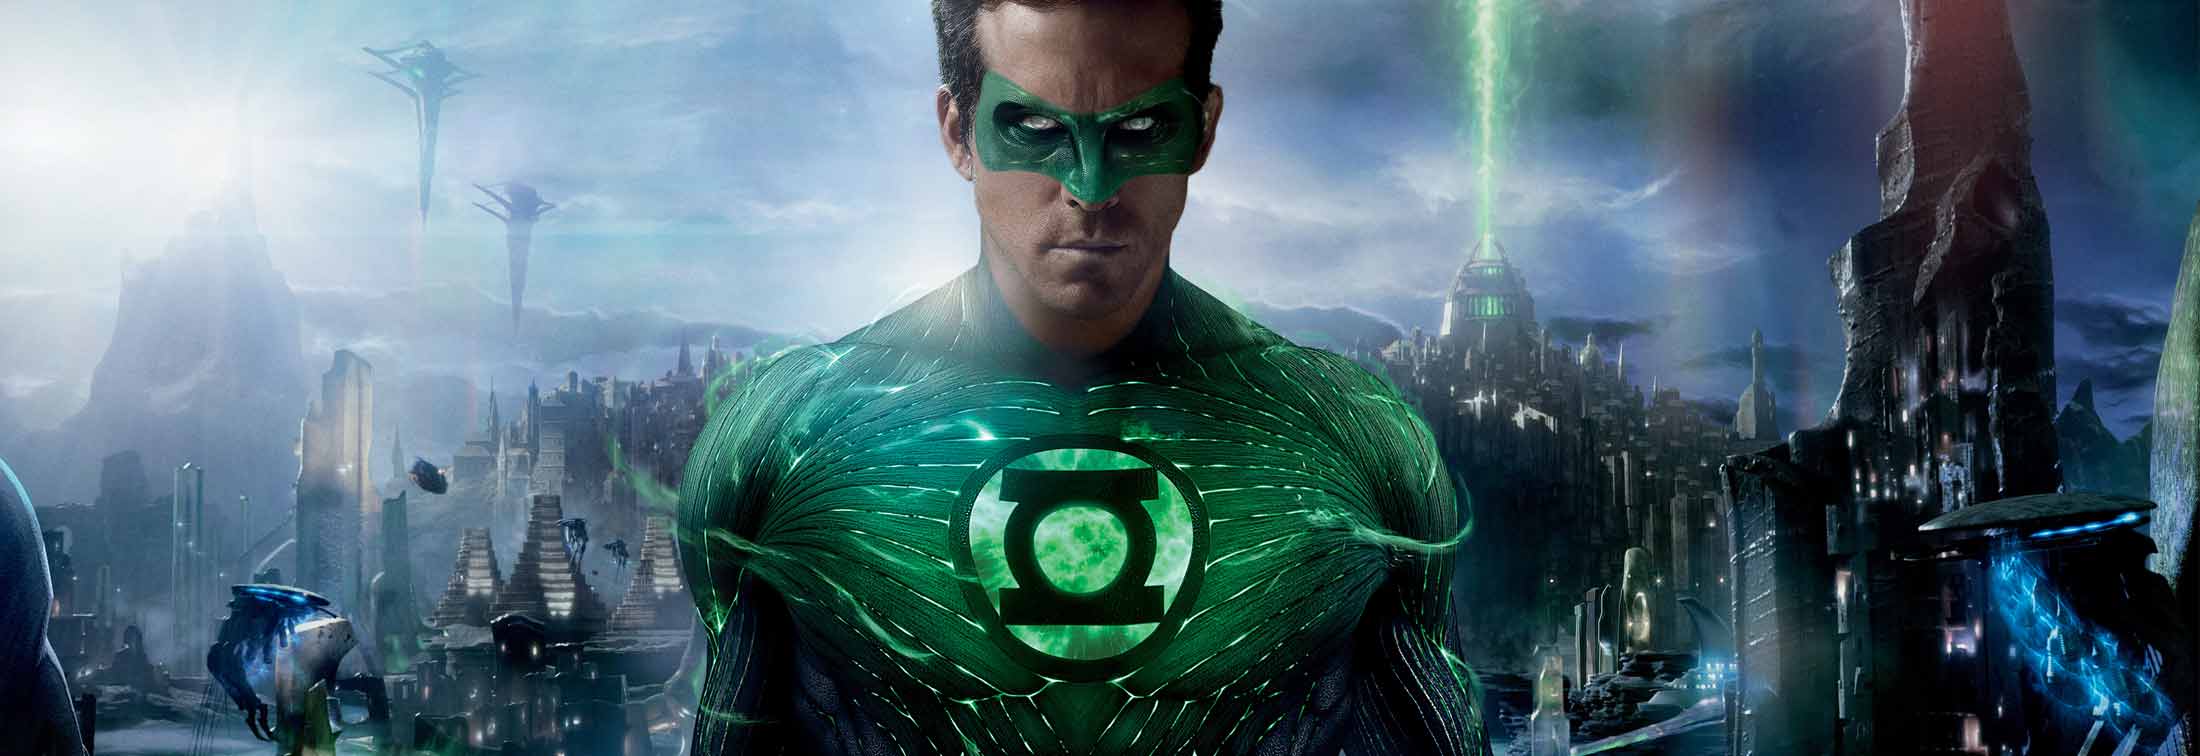 Green Lantern: 10th Anniversary - Failed Superheroes who got a second shot